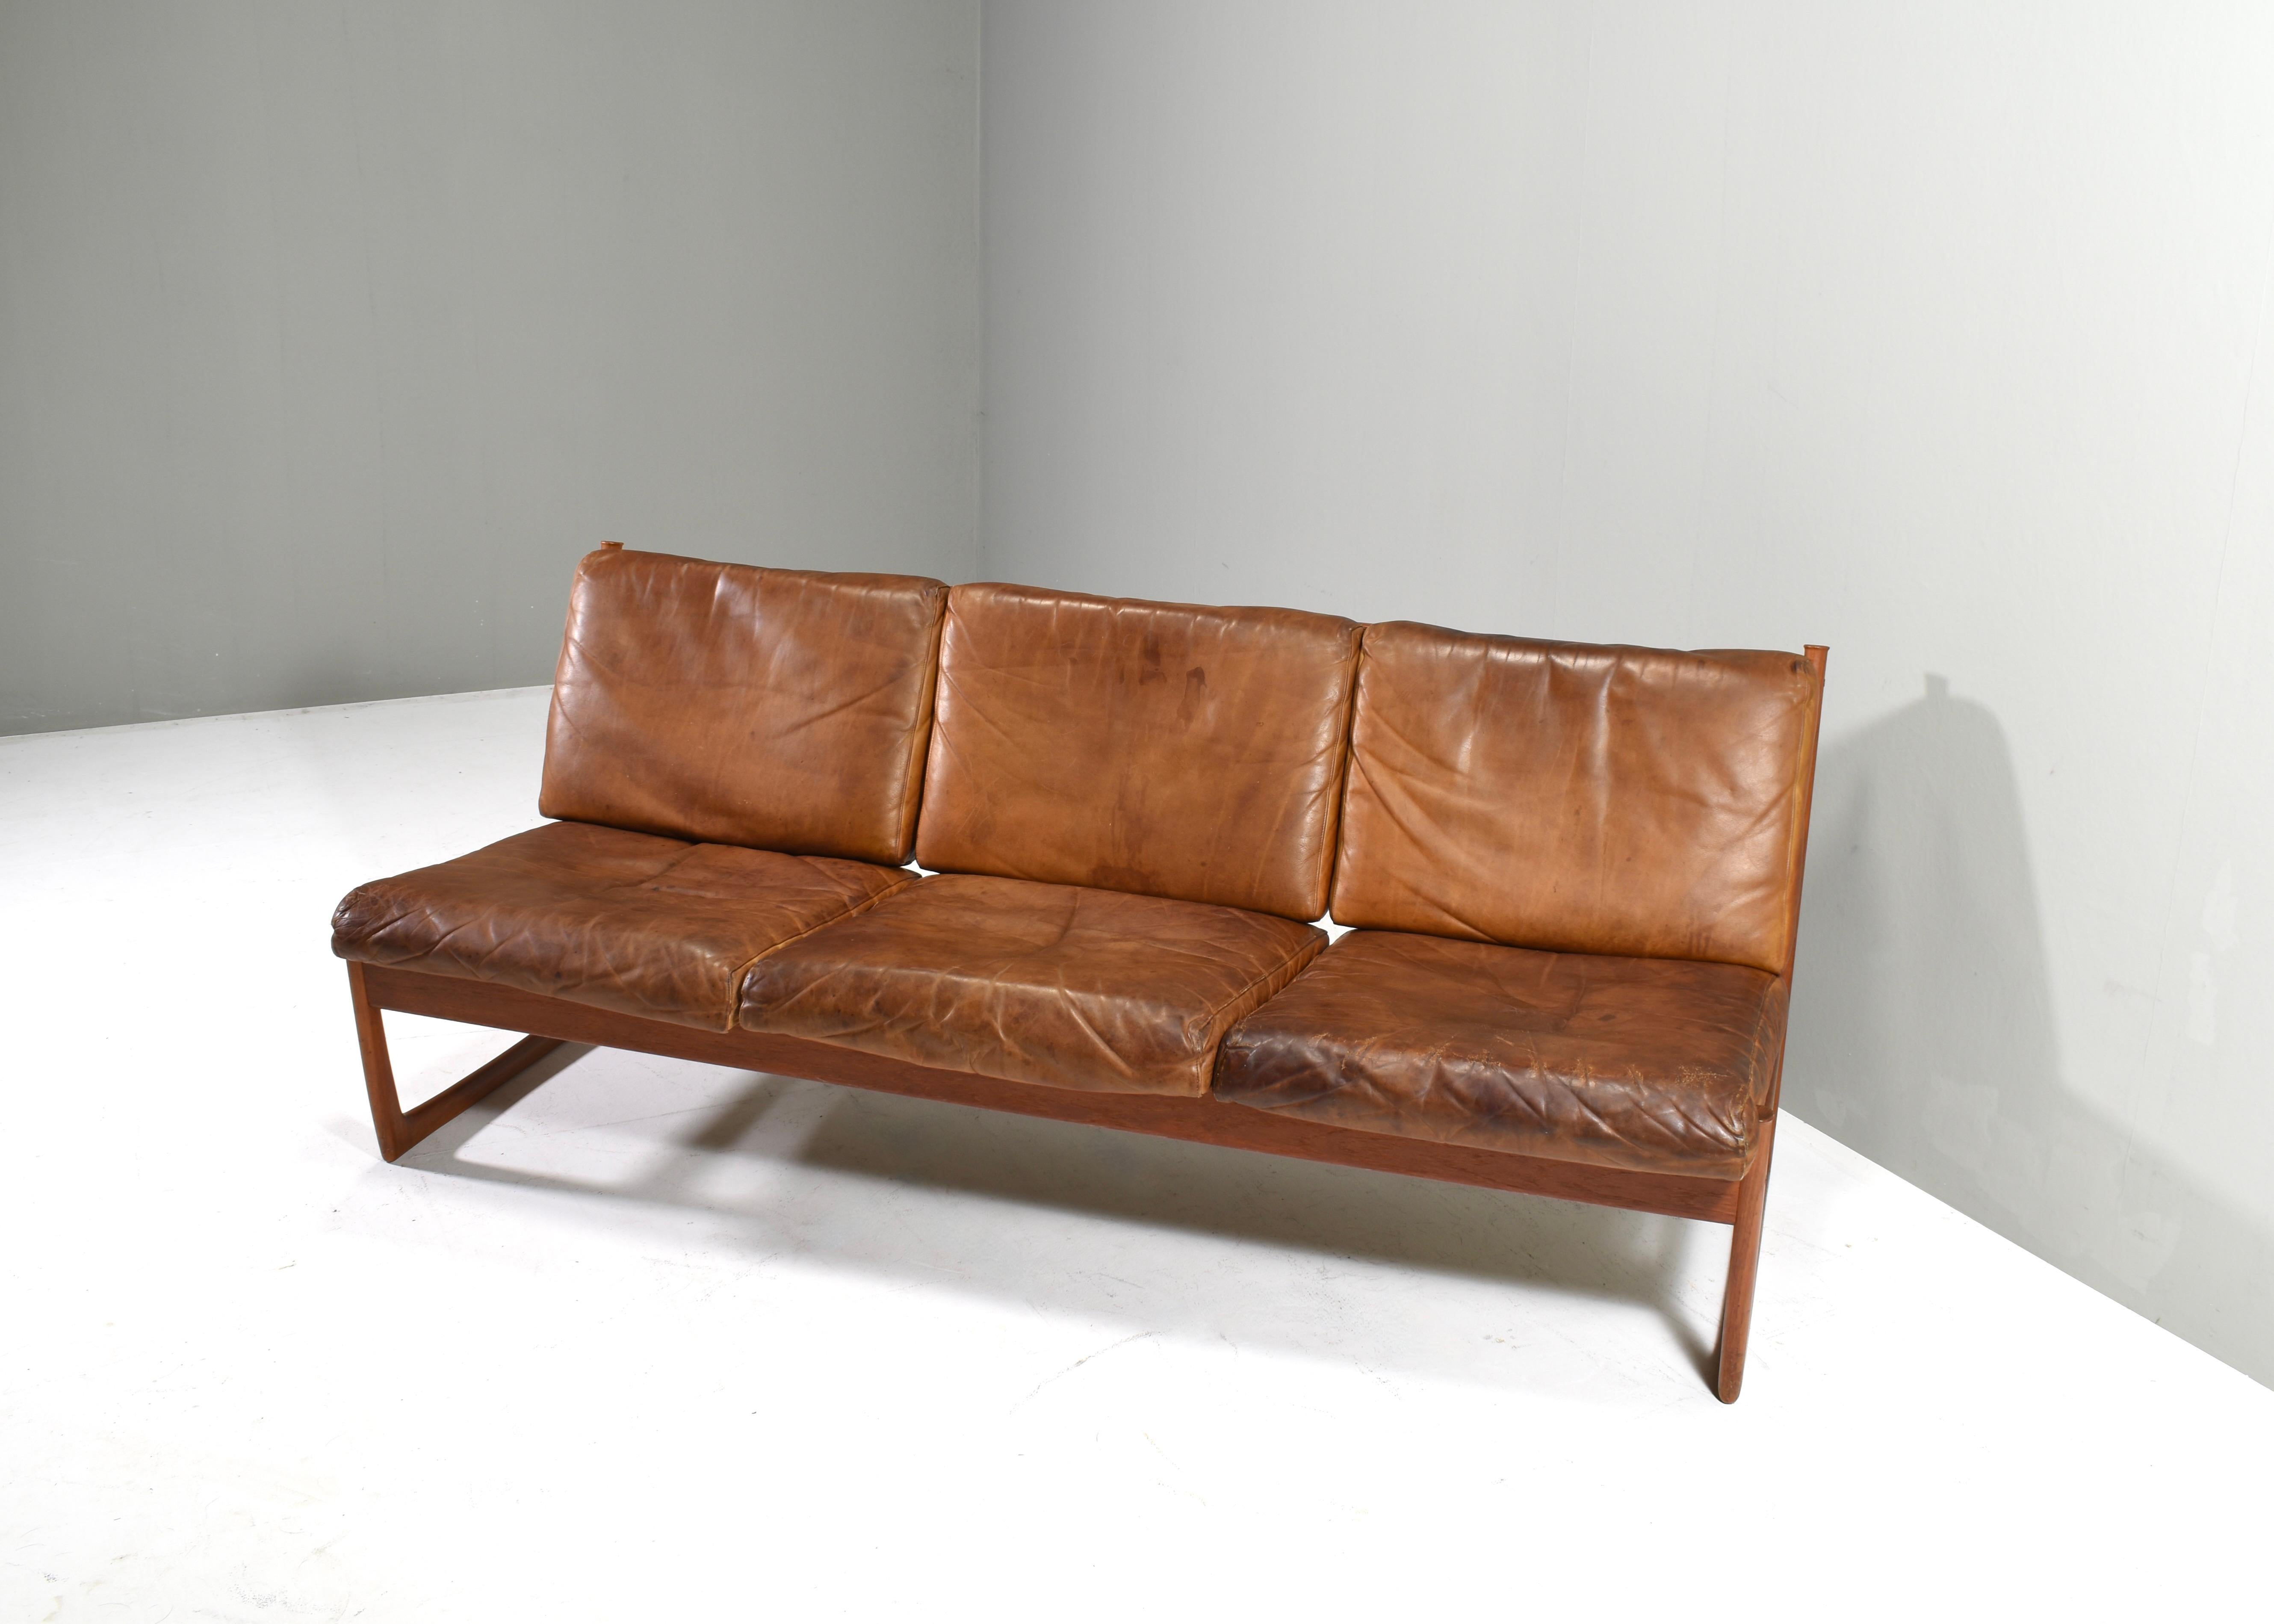 Danish Peter Hvidt & Orla Mølgaard FD130 Teak sofa in Cognac Leather - Denmark, 1950's For Sale